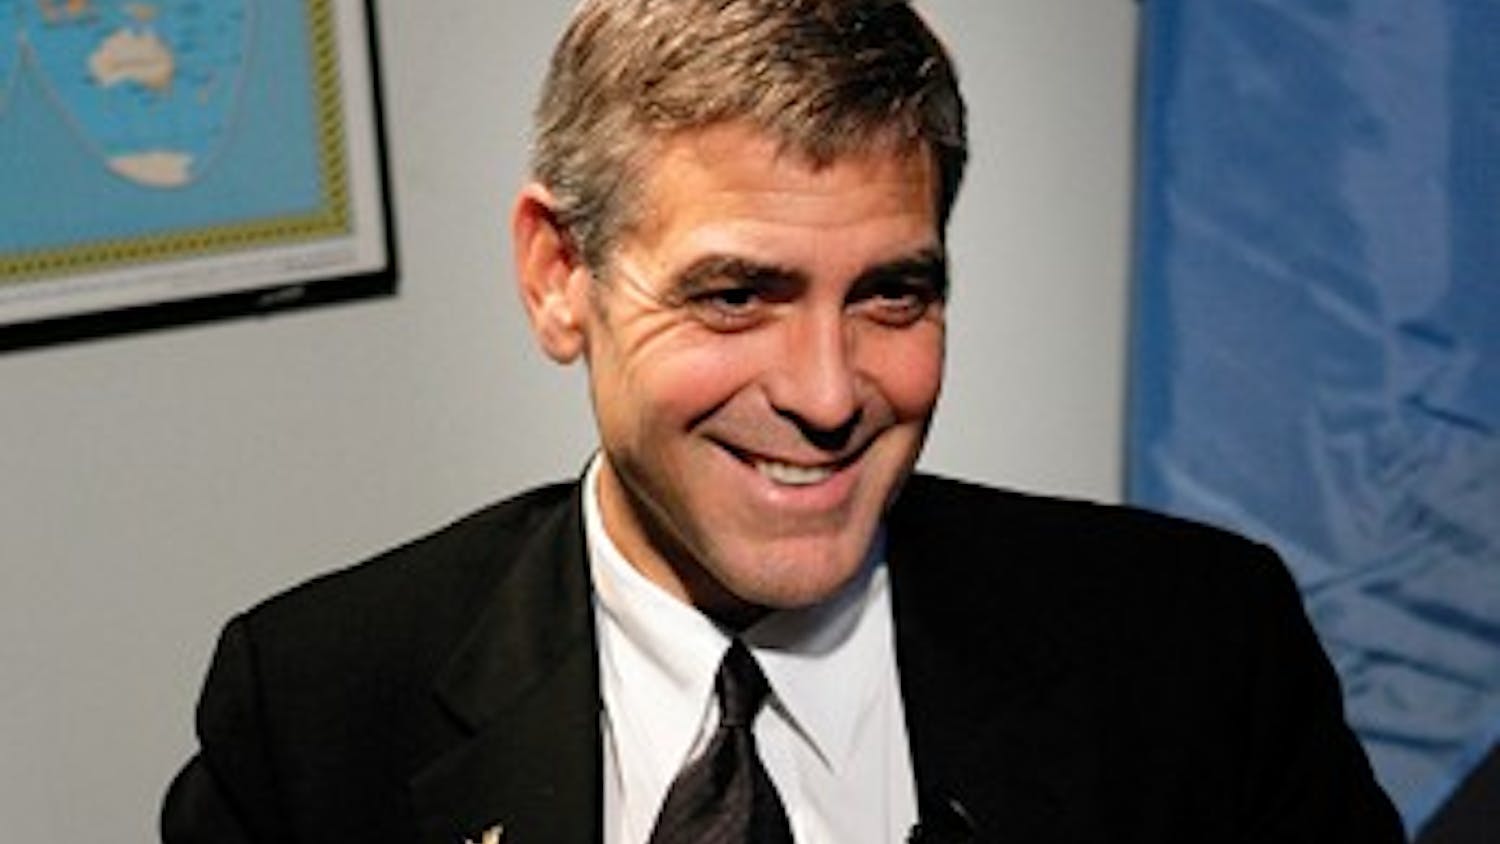 UN George Clooney